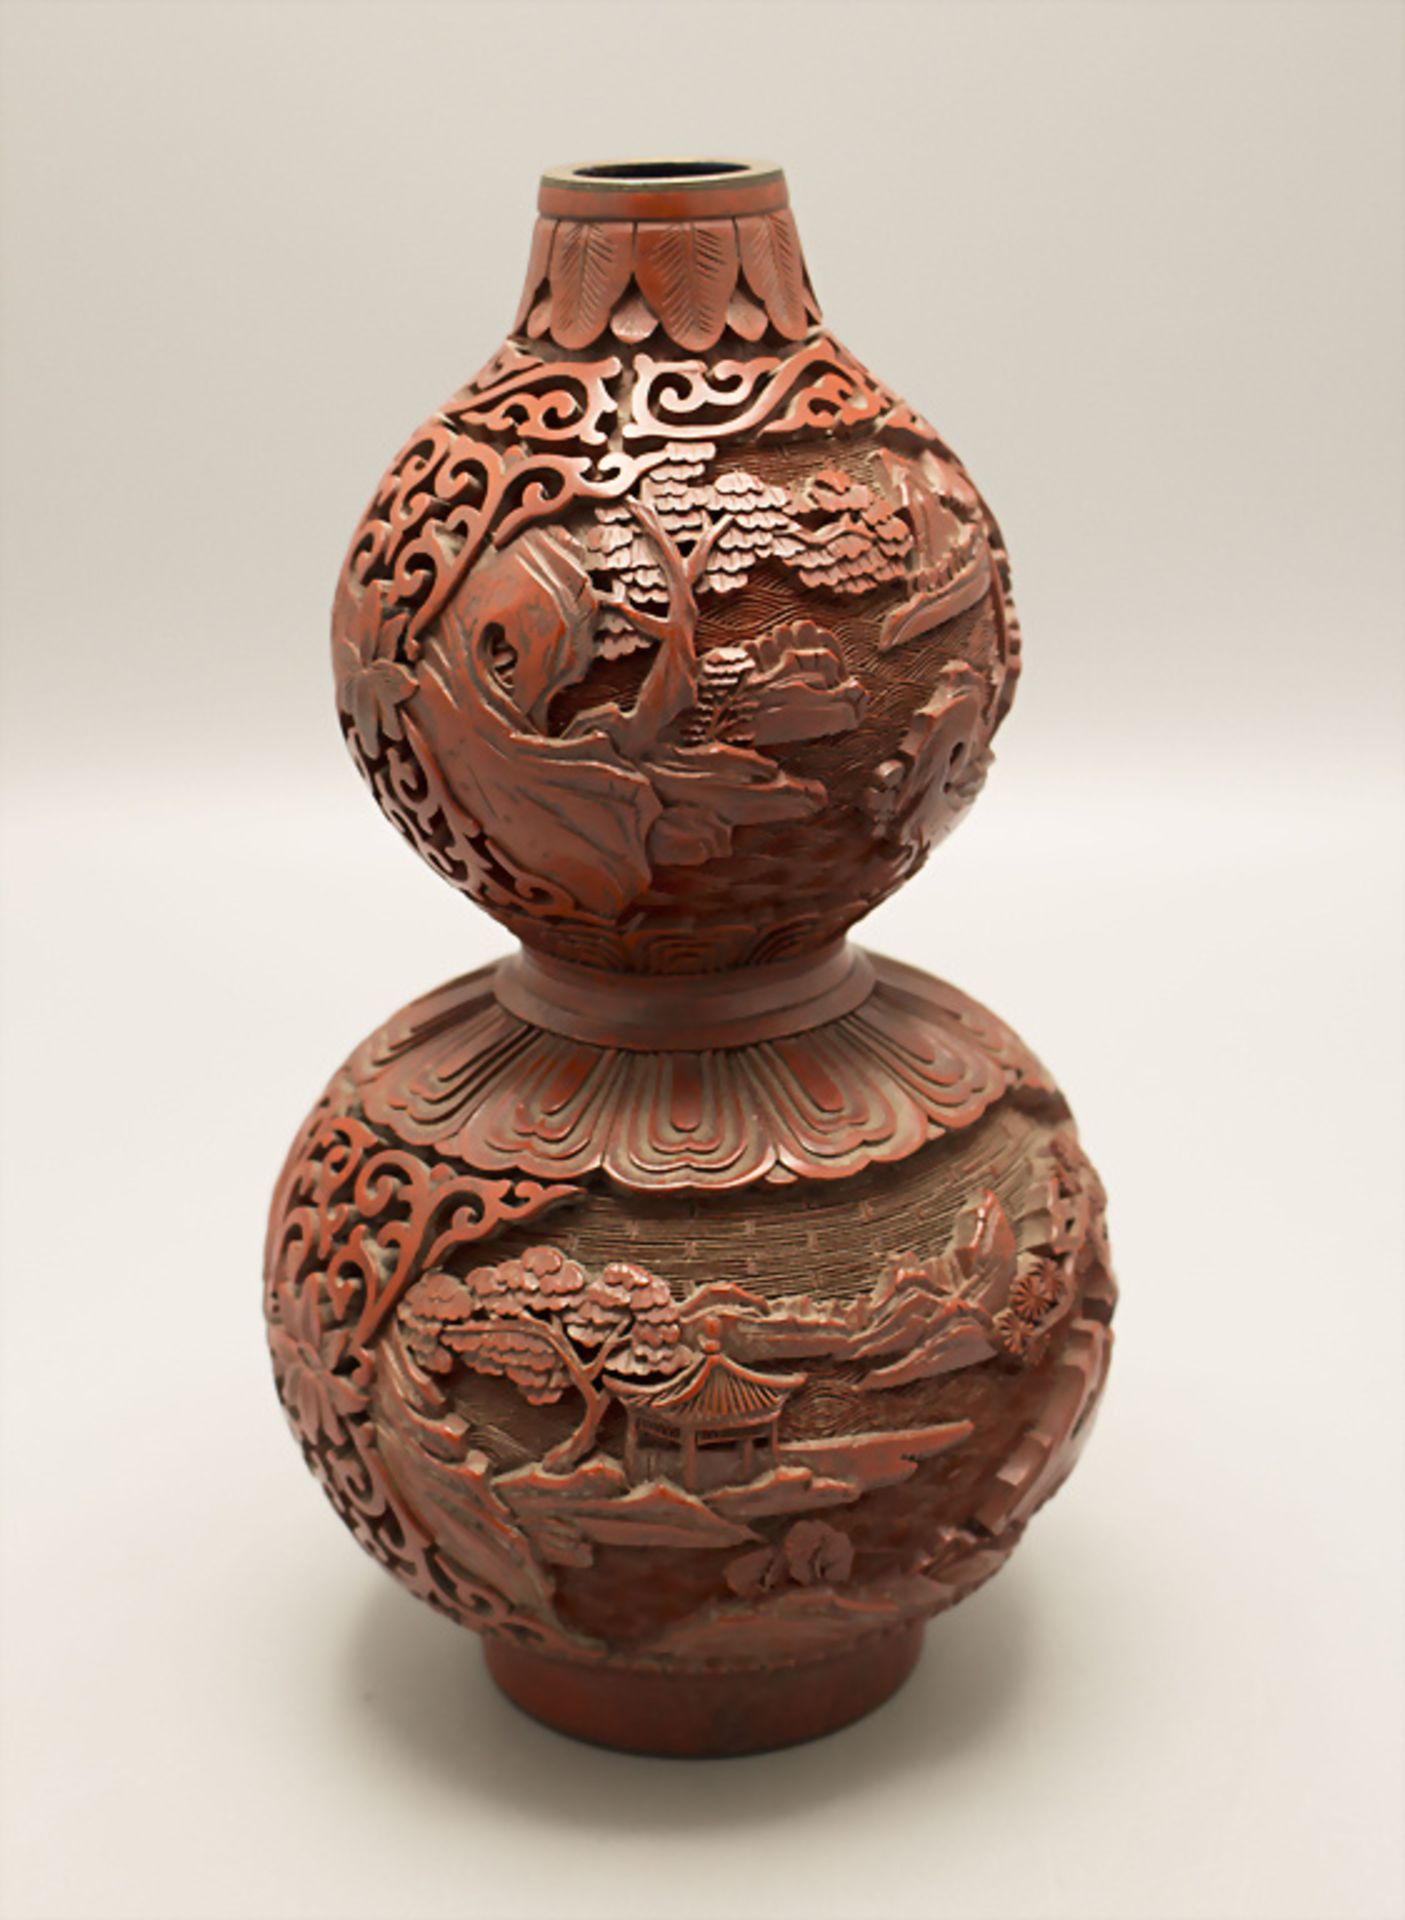 Kalebassen-Lackvase, China, Qing Dynastie (1644-1911), 19. Jh.